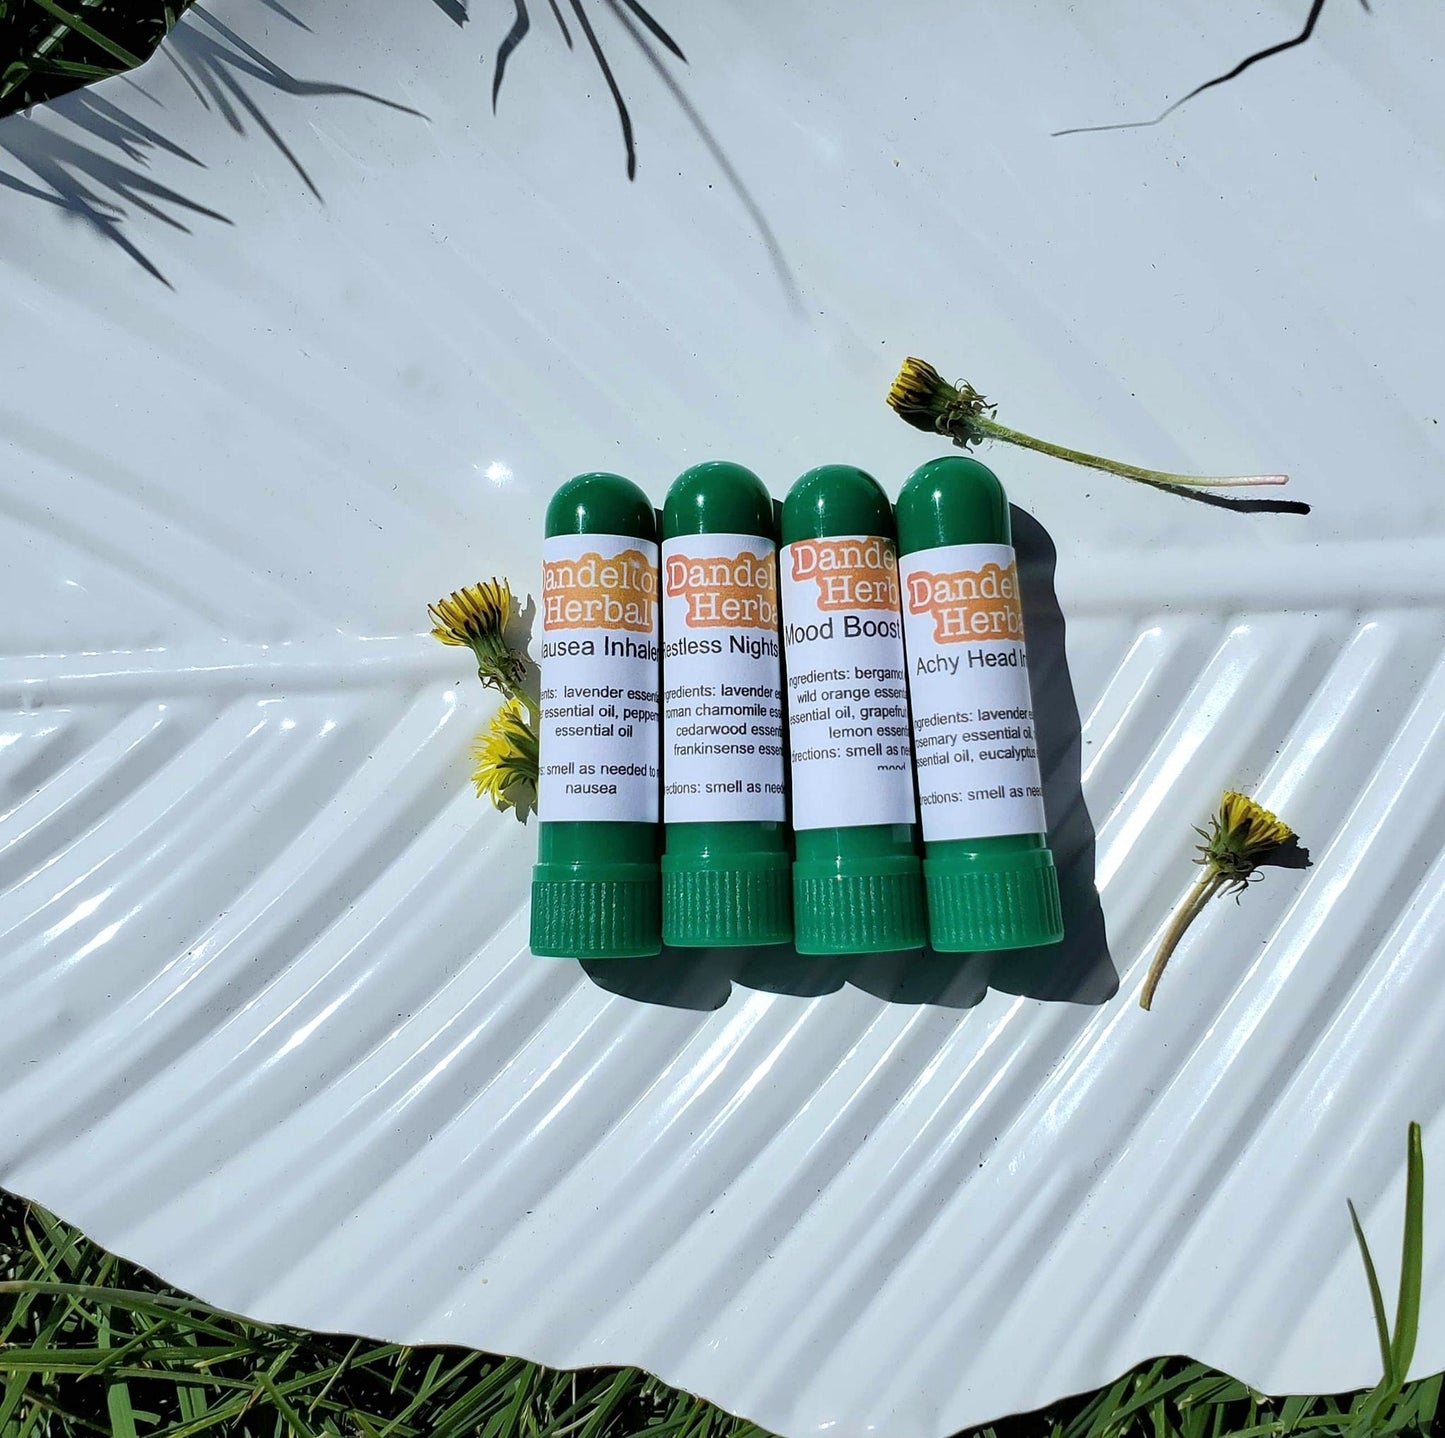 Dandelion Herbal - Aromatherapy Inhalers